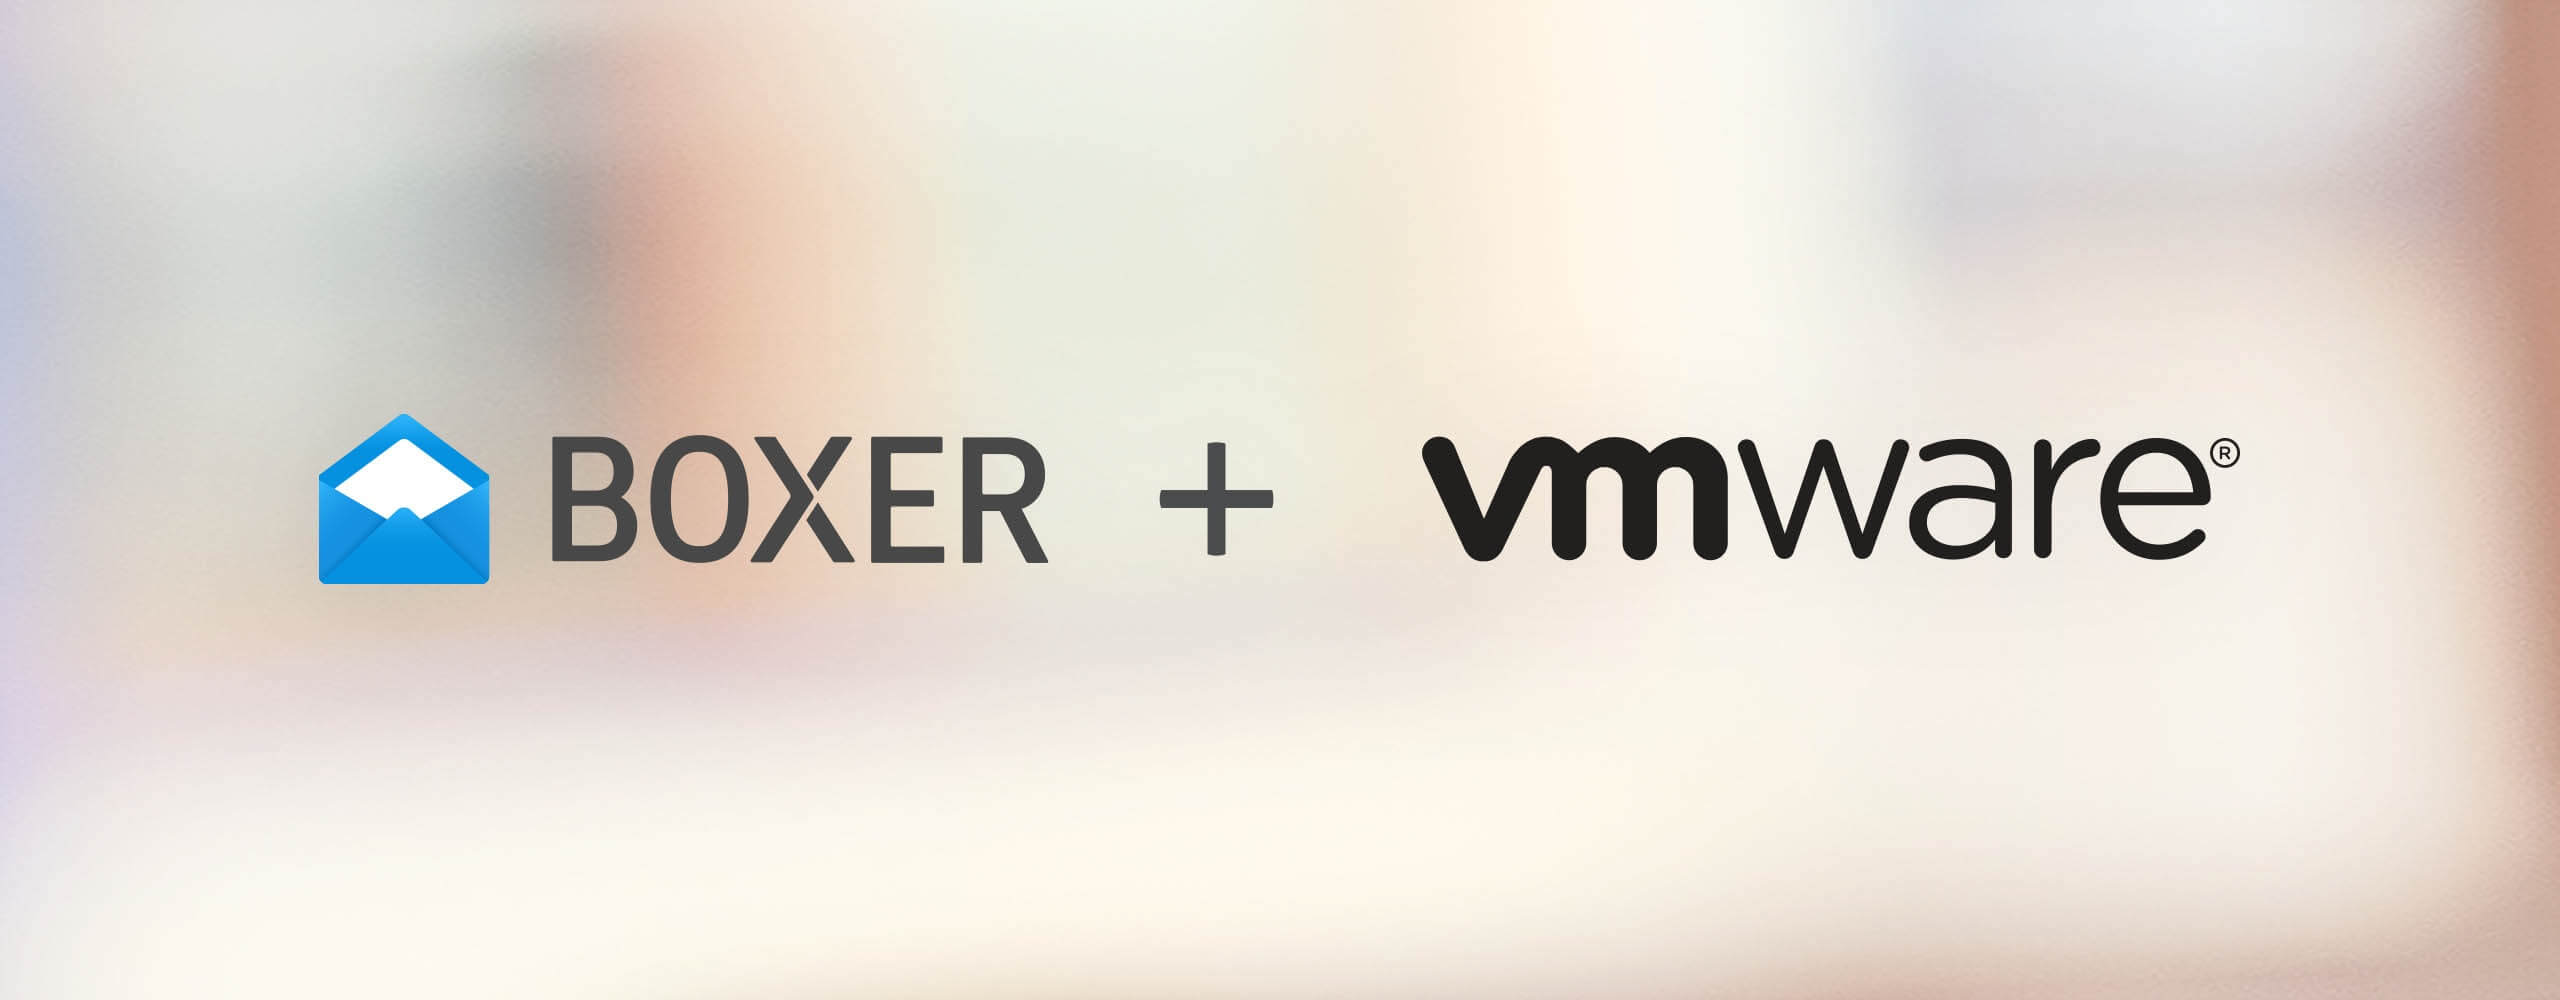 VMware to buy Boxer